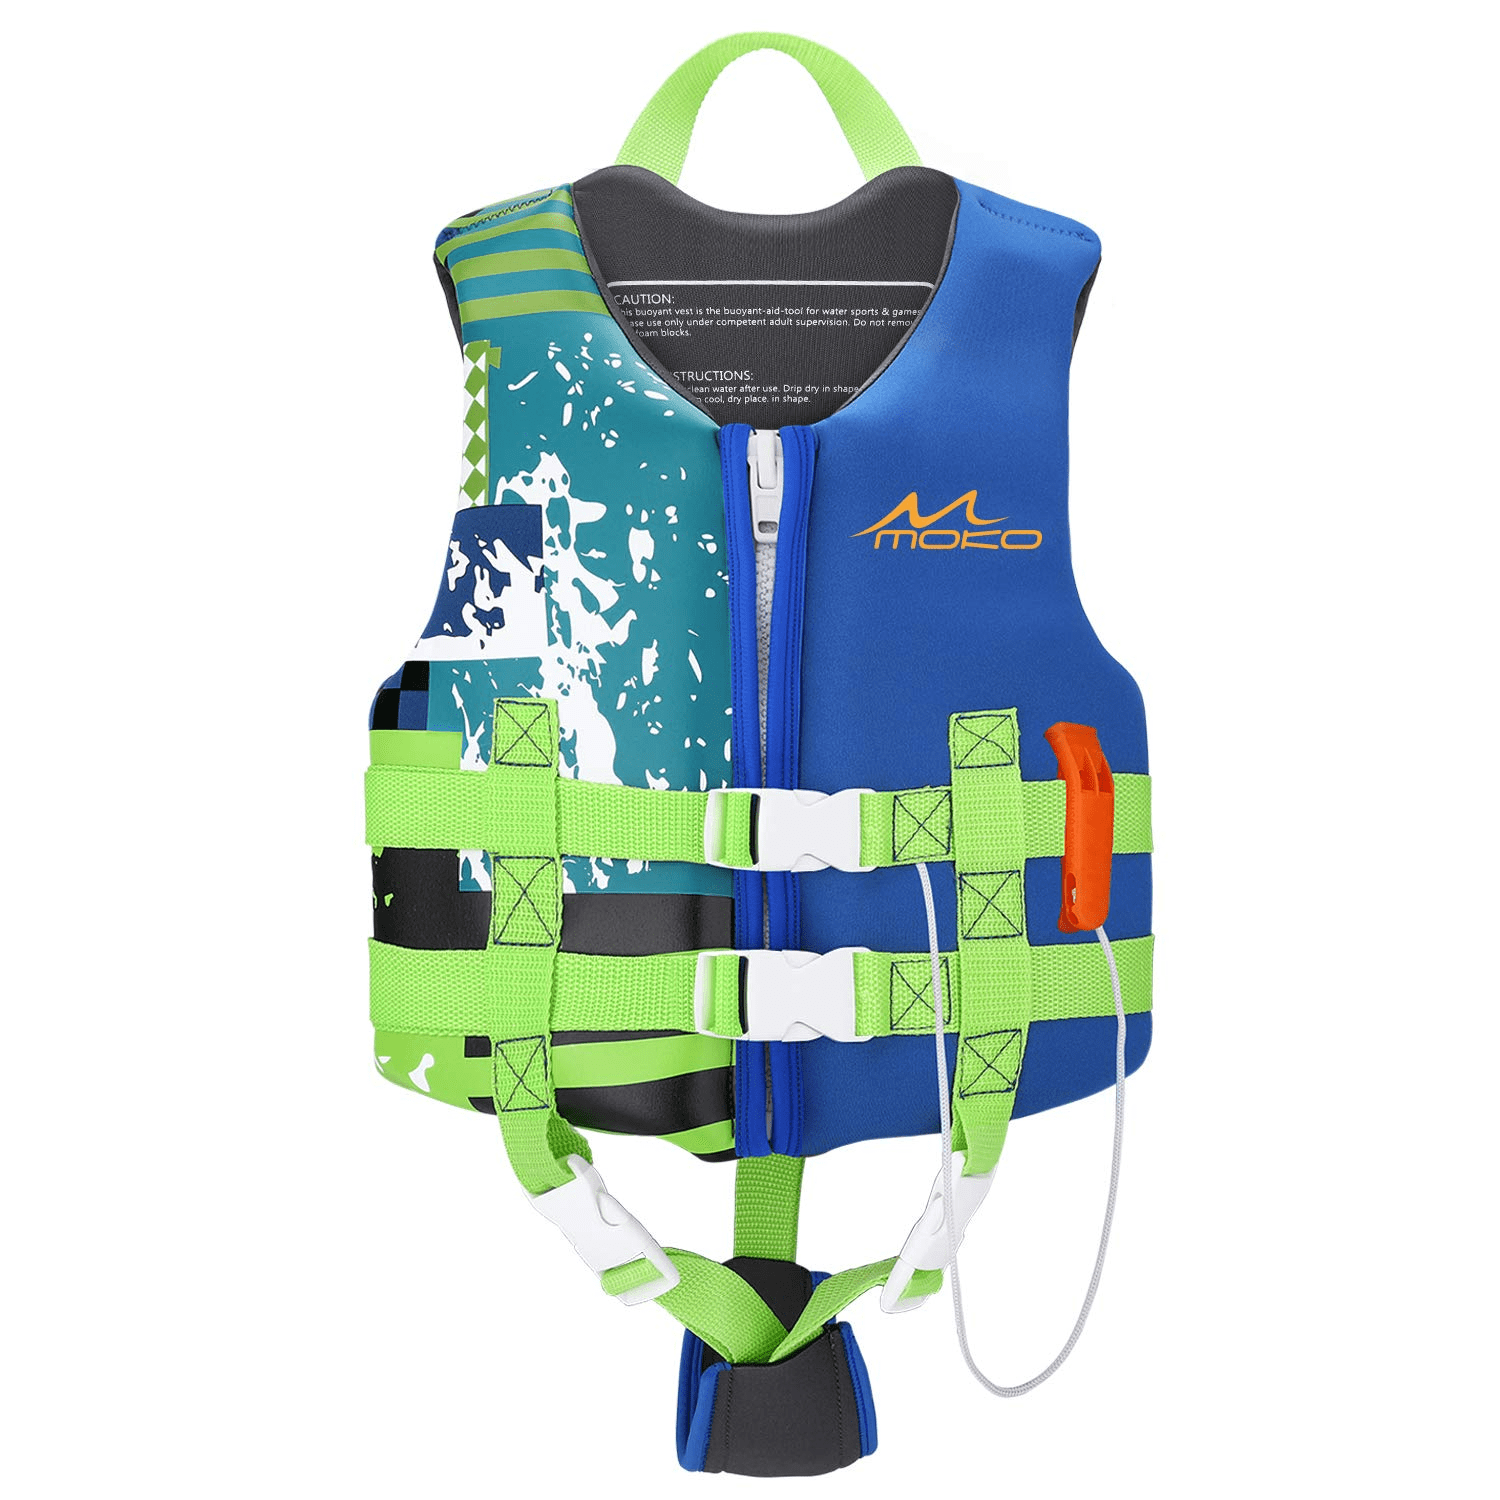 New Swimming Children's LIFE VEST Buoyancy Sport Jacket Bathing Suit for Kids 